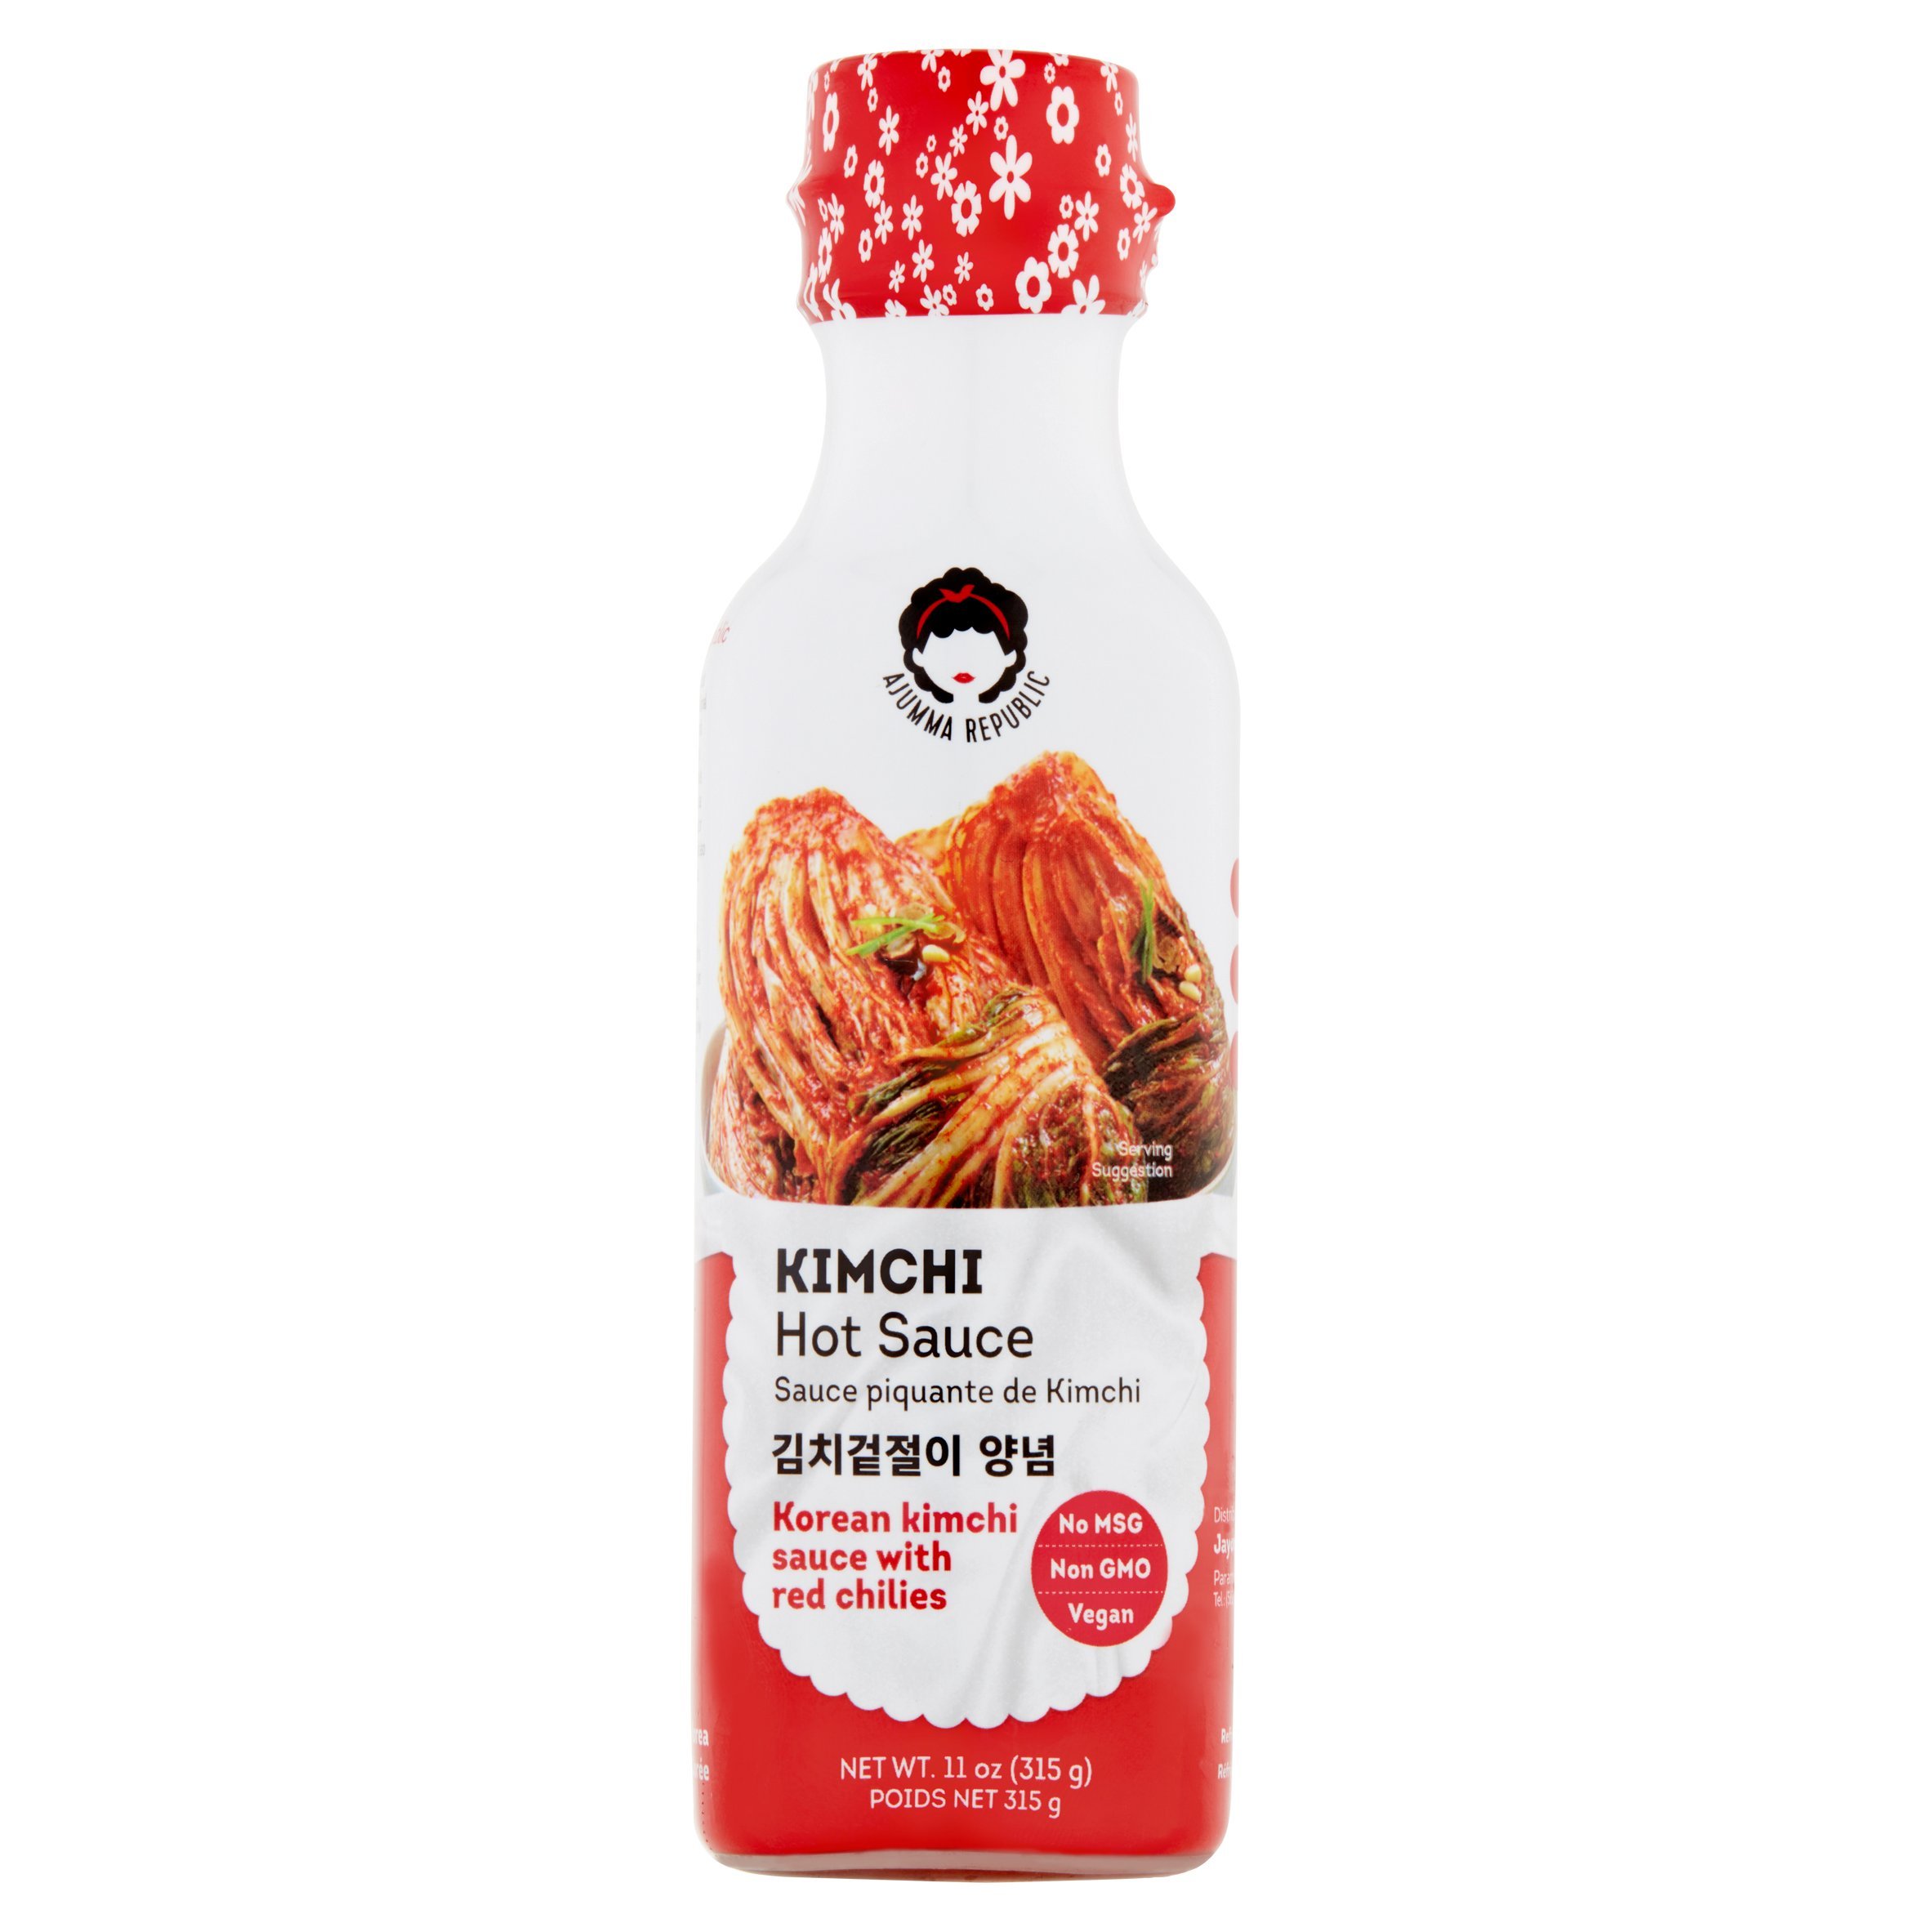 Kimchi загородный. Ajumma Republic Kimchi. KANIMORY соус кимчи. Соус кимчи бейс. Рыбный соус для кимчи.